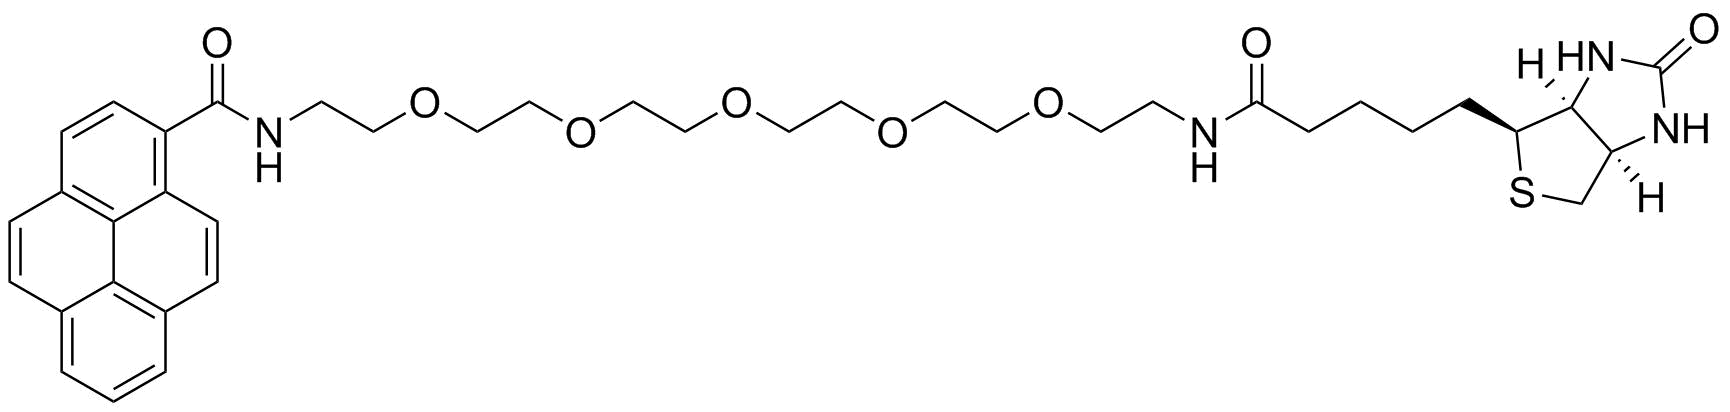 Pyrene-PEG5-biotin